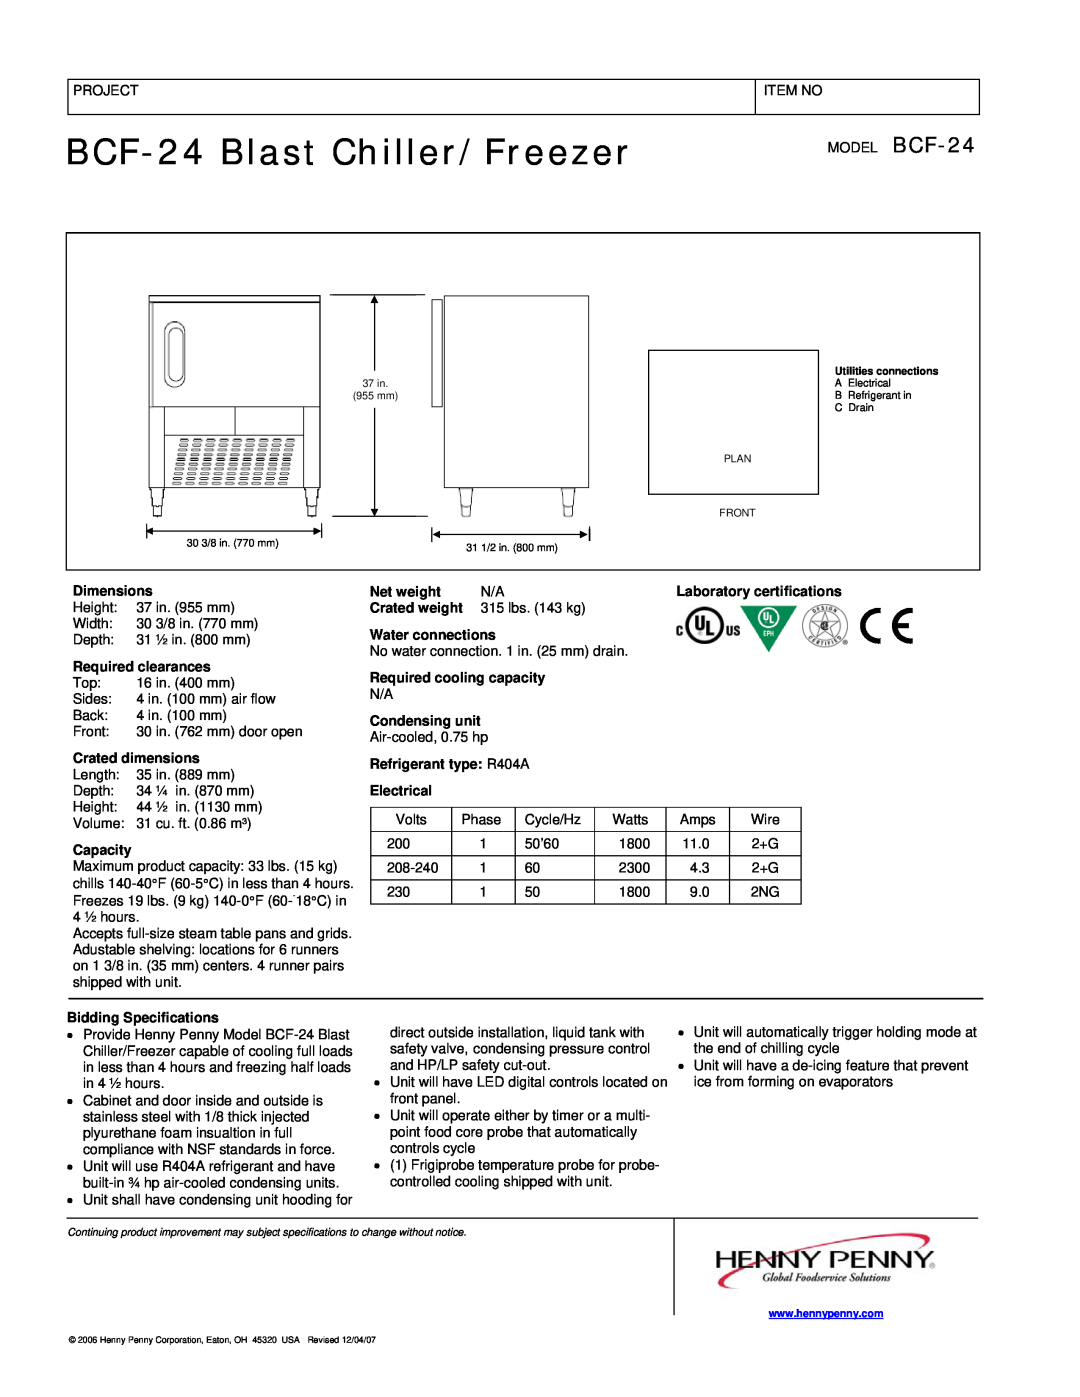 Henny Penny manual BCF-24Blast Chiller/Freezer, Dimensions 